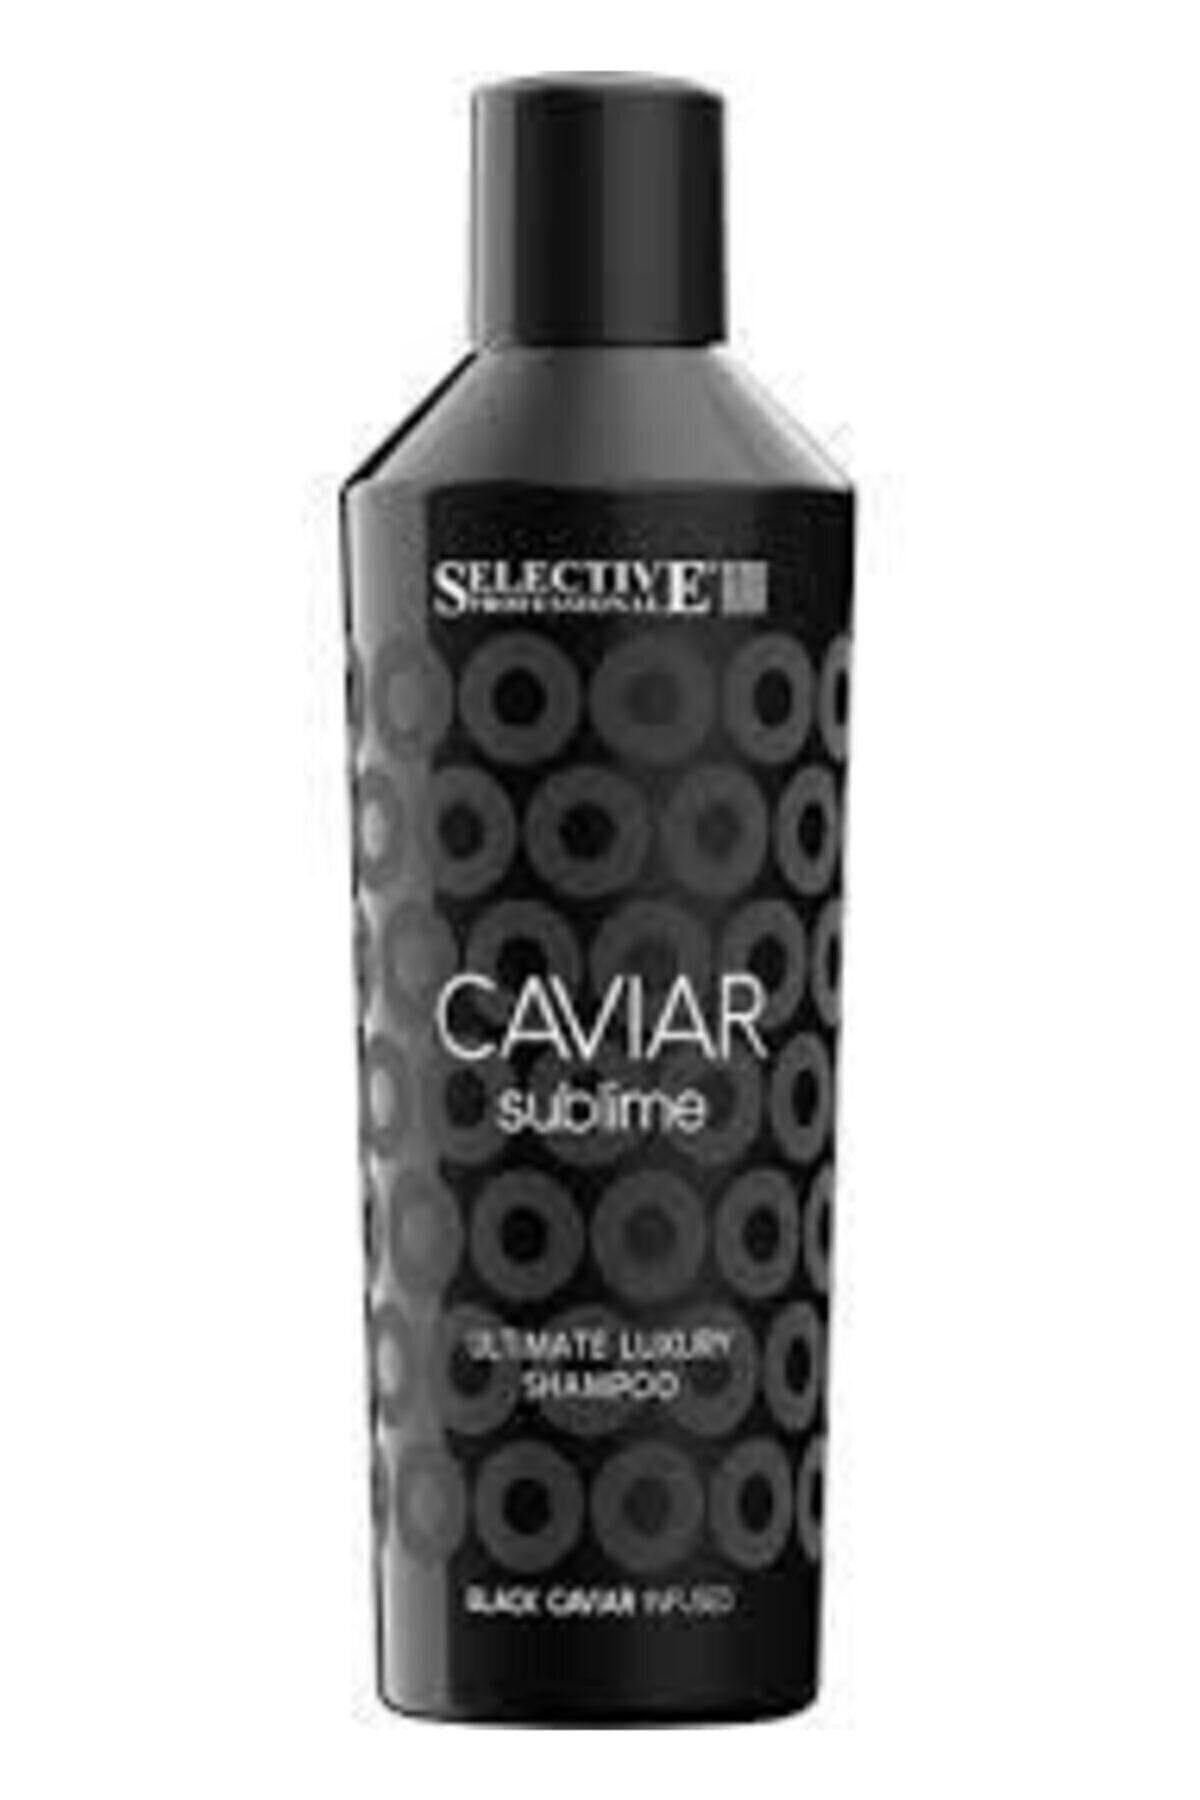 Selective Caviar Sublime Ultimate Luxury Şampuan 1000ml Newonlıne.9